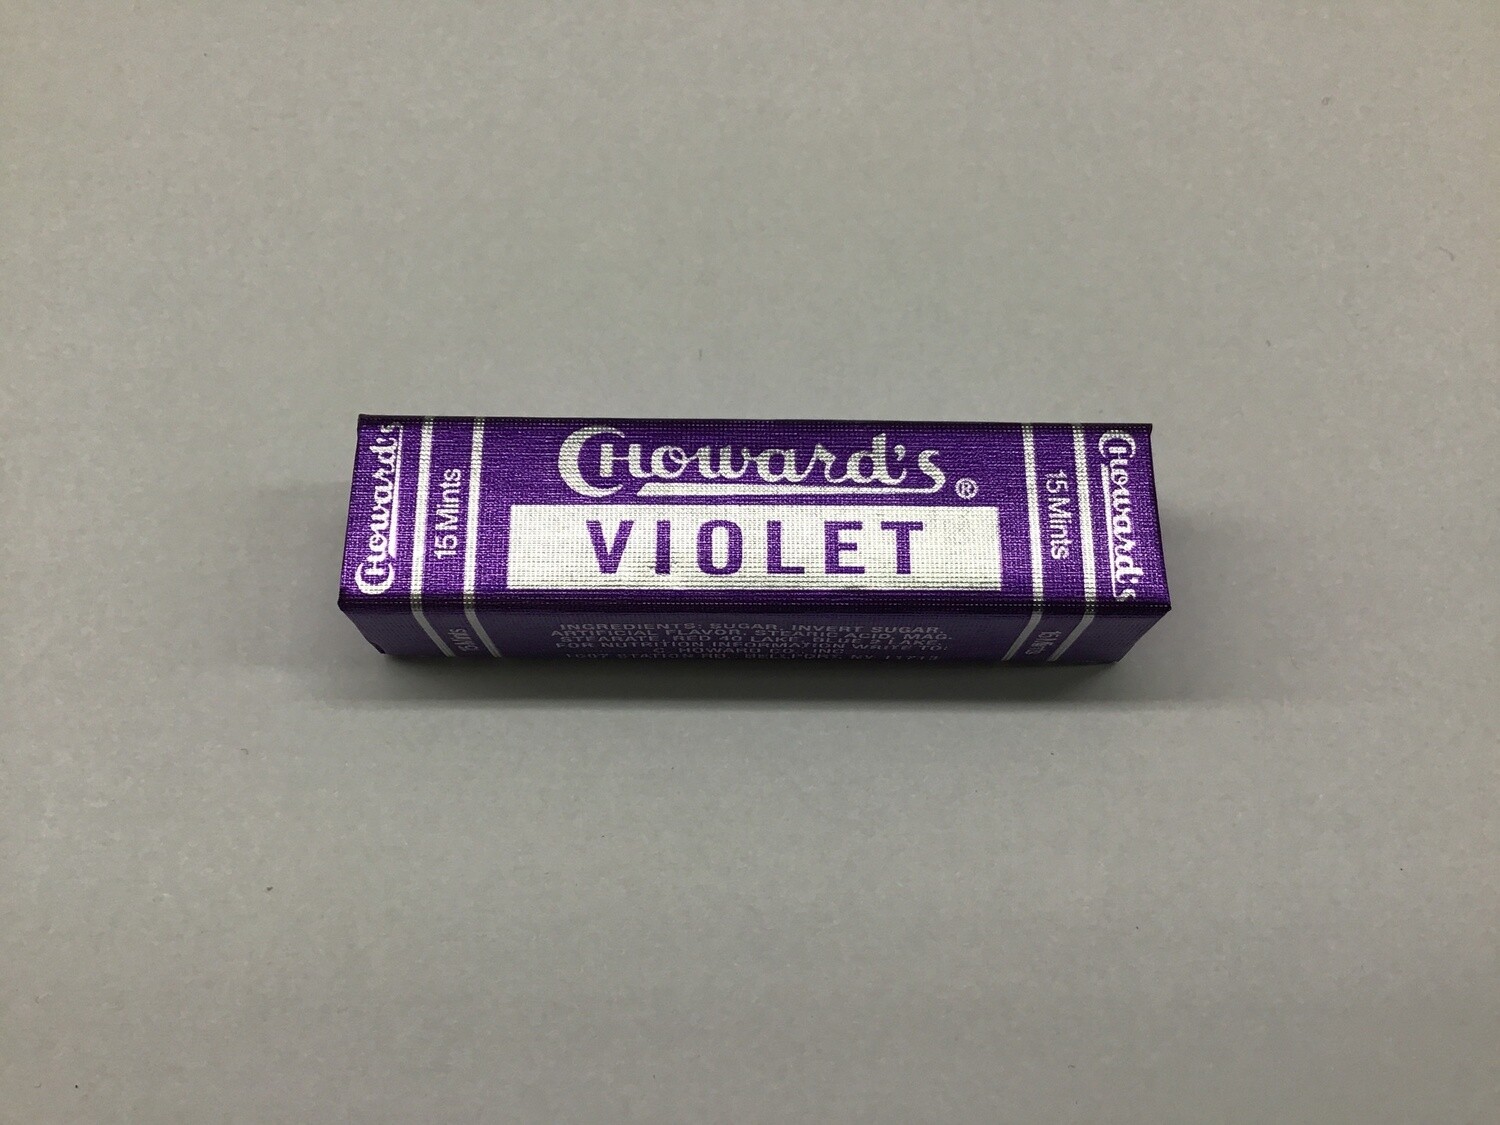 CHowards - Violet Mints